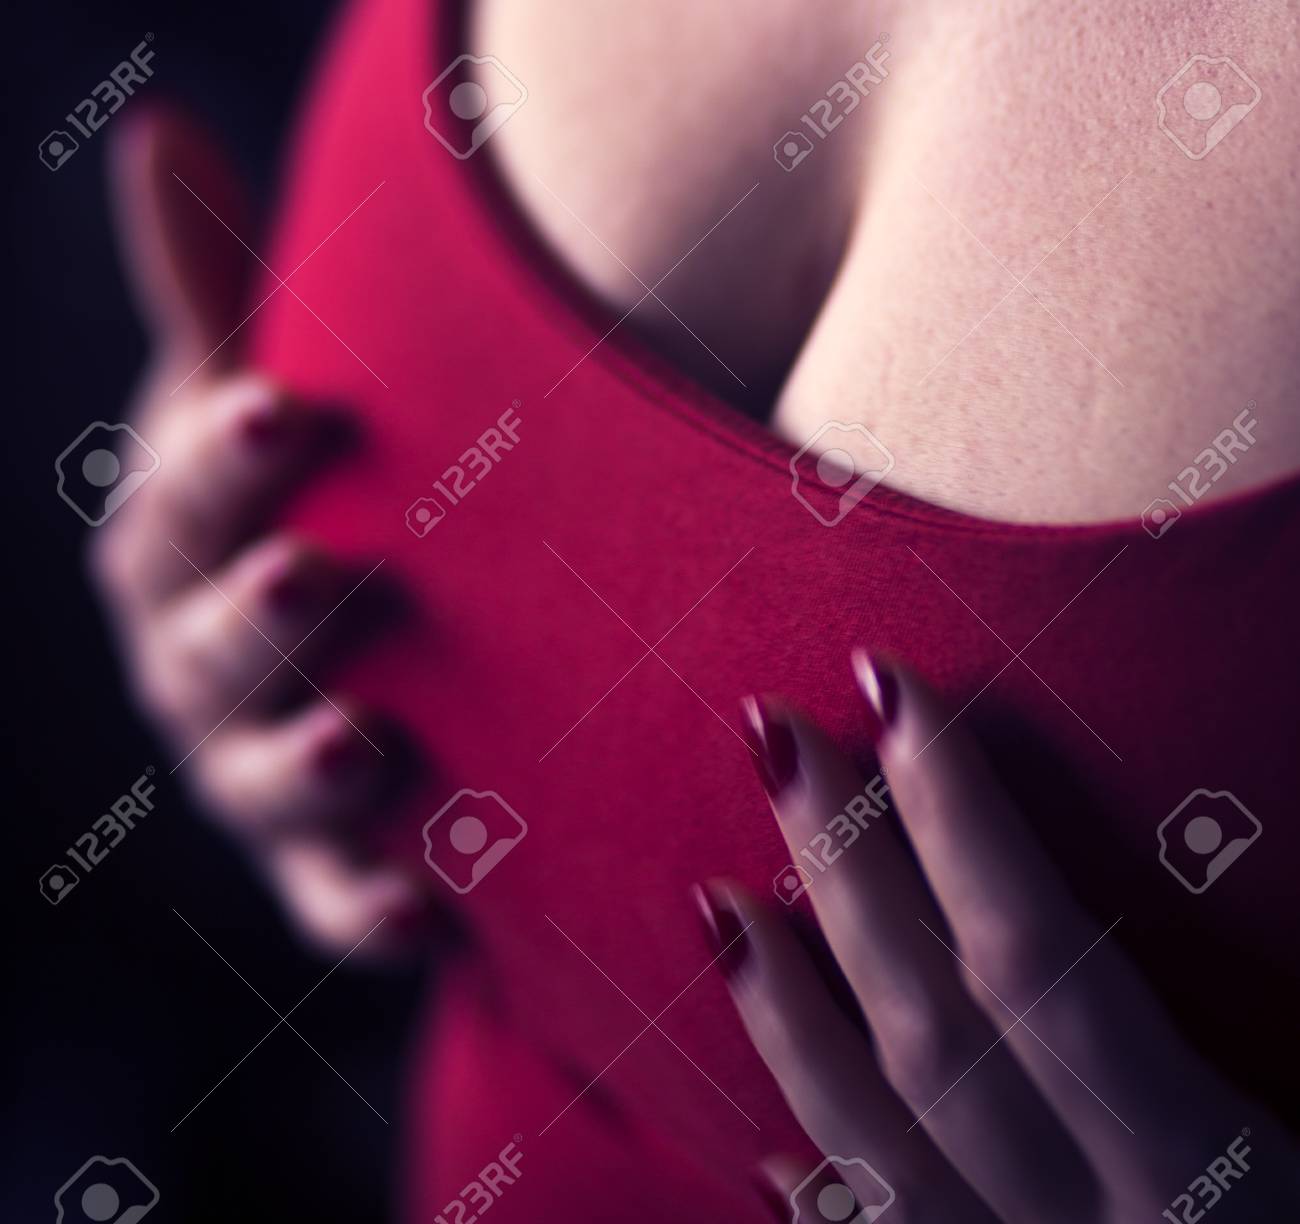 Very very very big busty boobs